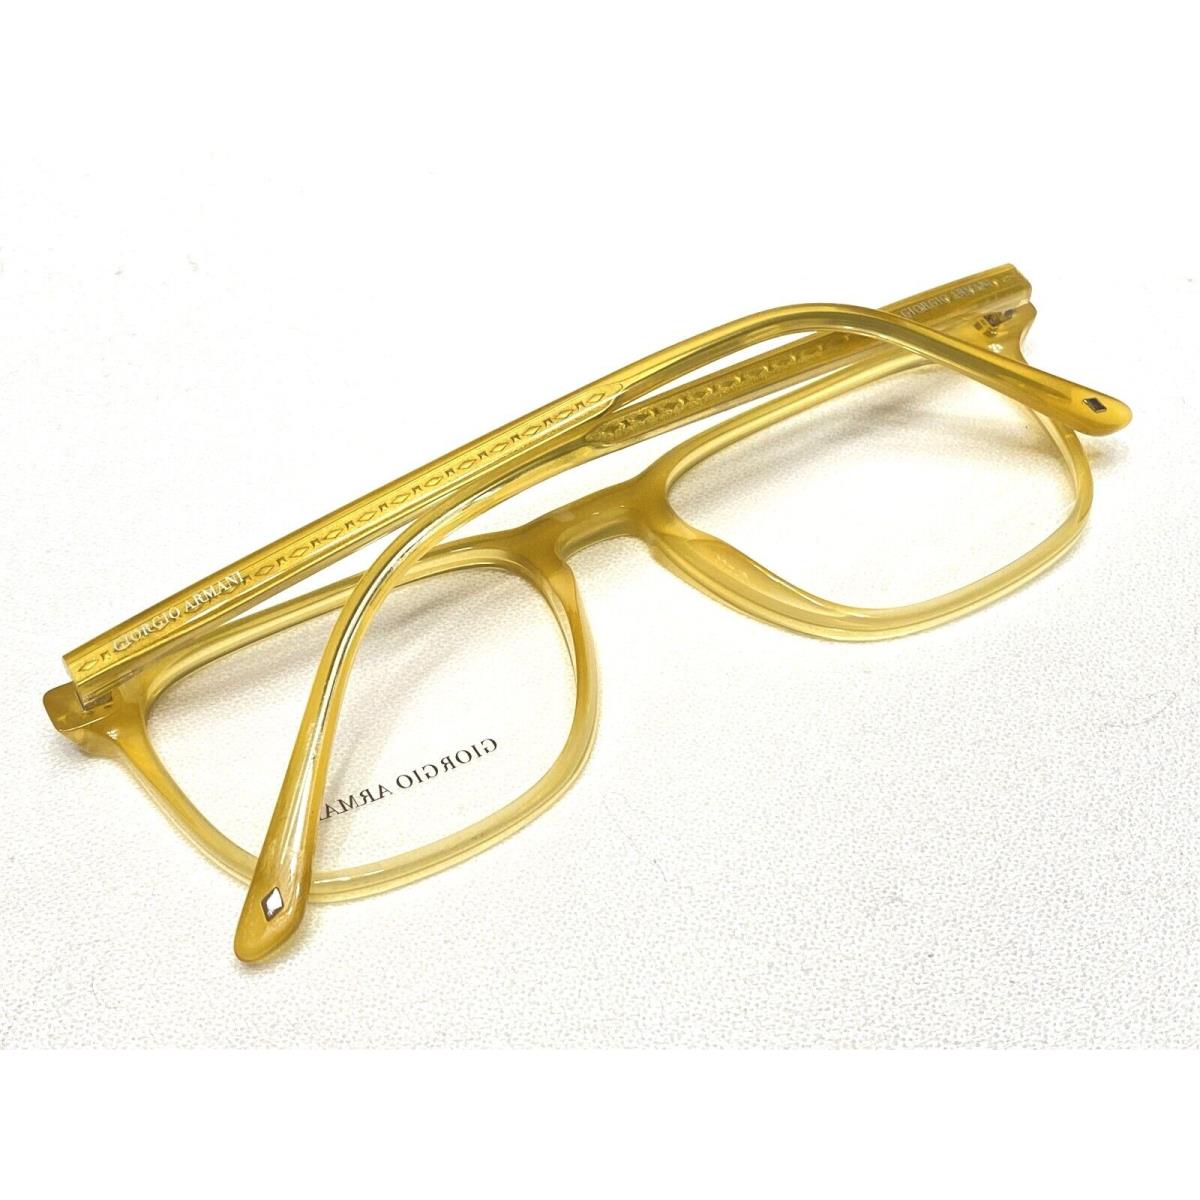 Giorgio Armani eyeglasses  - Translucent Yellow / Honey , Honey Frame, 5027 Manufacturer 4